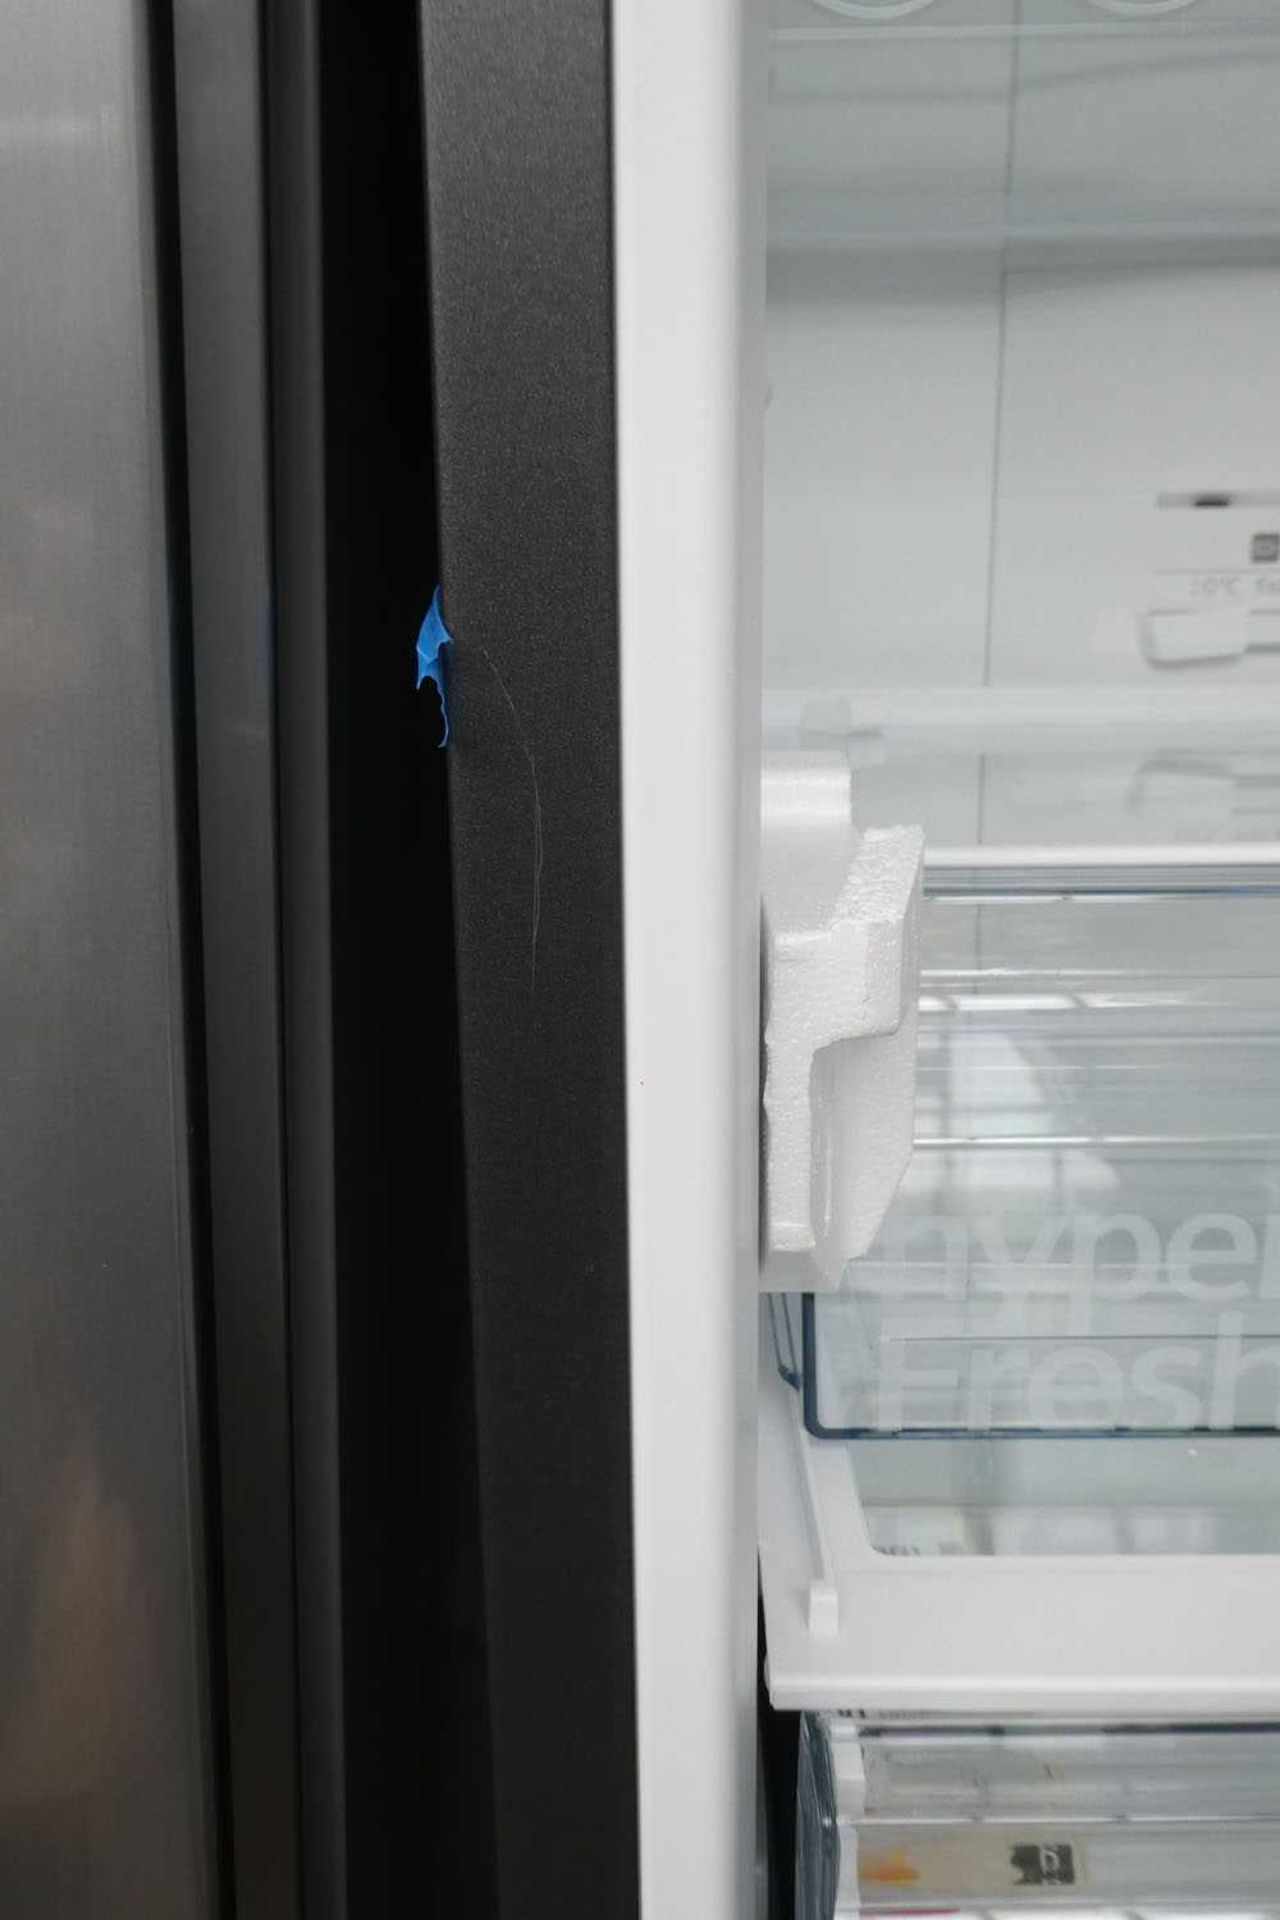 +VAT KG36NXXDC-B Siemens Free-standing fridge-freezer - Image 2 of 4